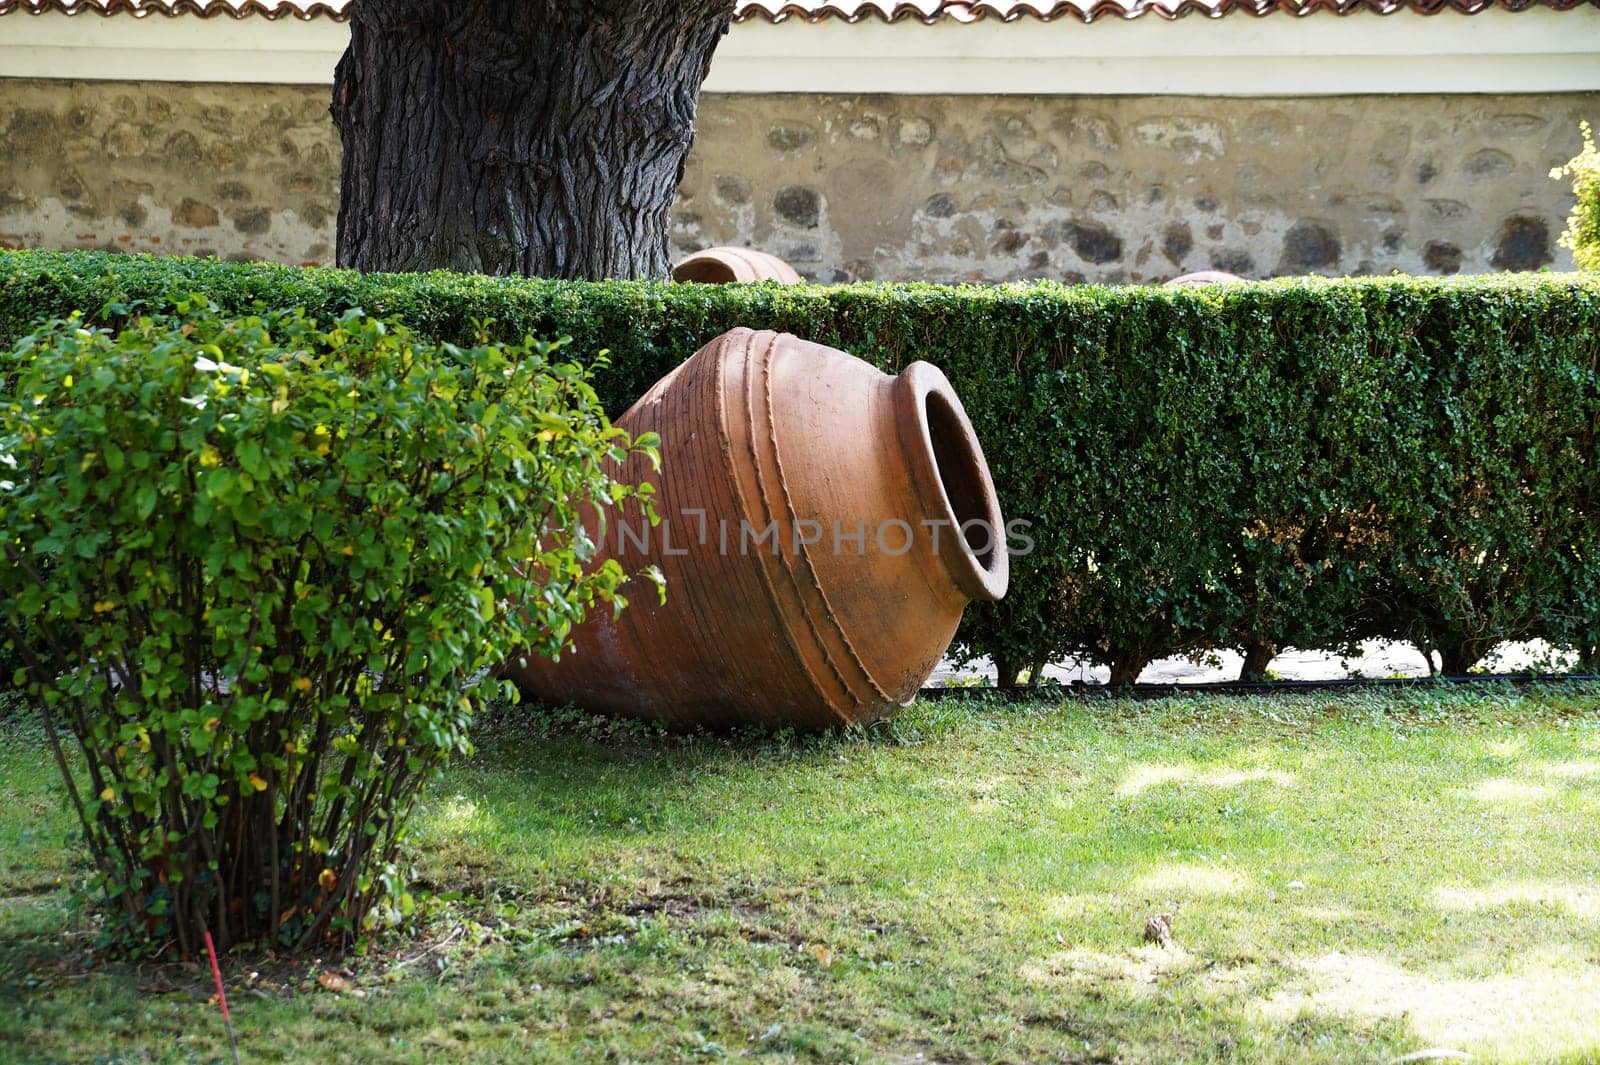 fallen clay jug as an element of landscape design in the garden.